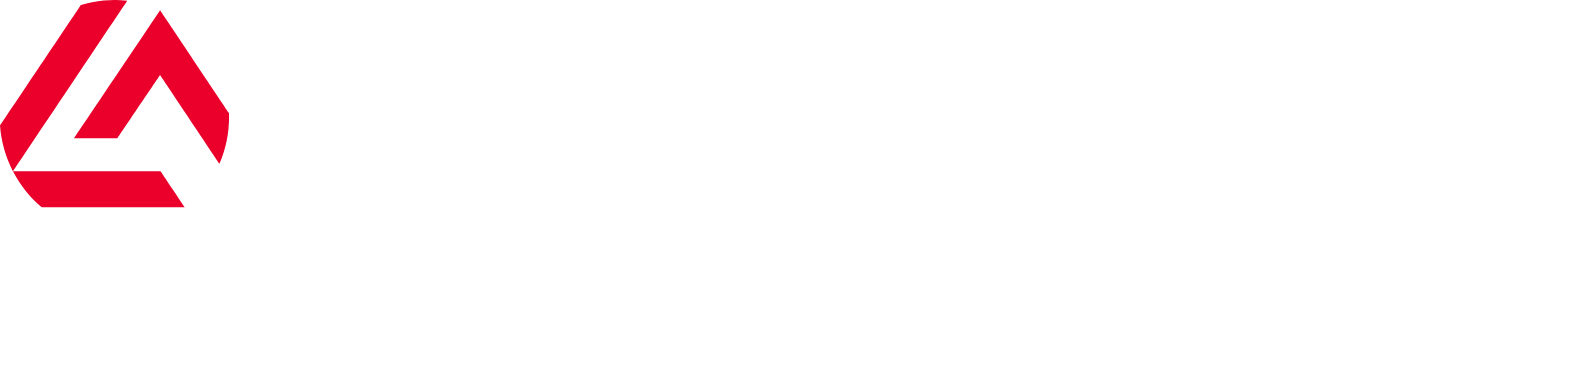 Eurobank Ergasias Services and Holdings Logo groß für dunkle Hintergründe (transparentes PNG)